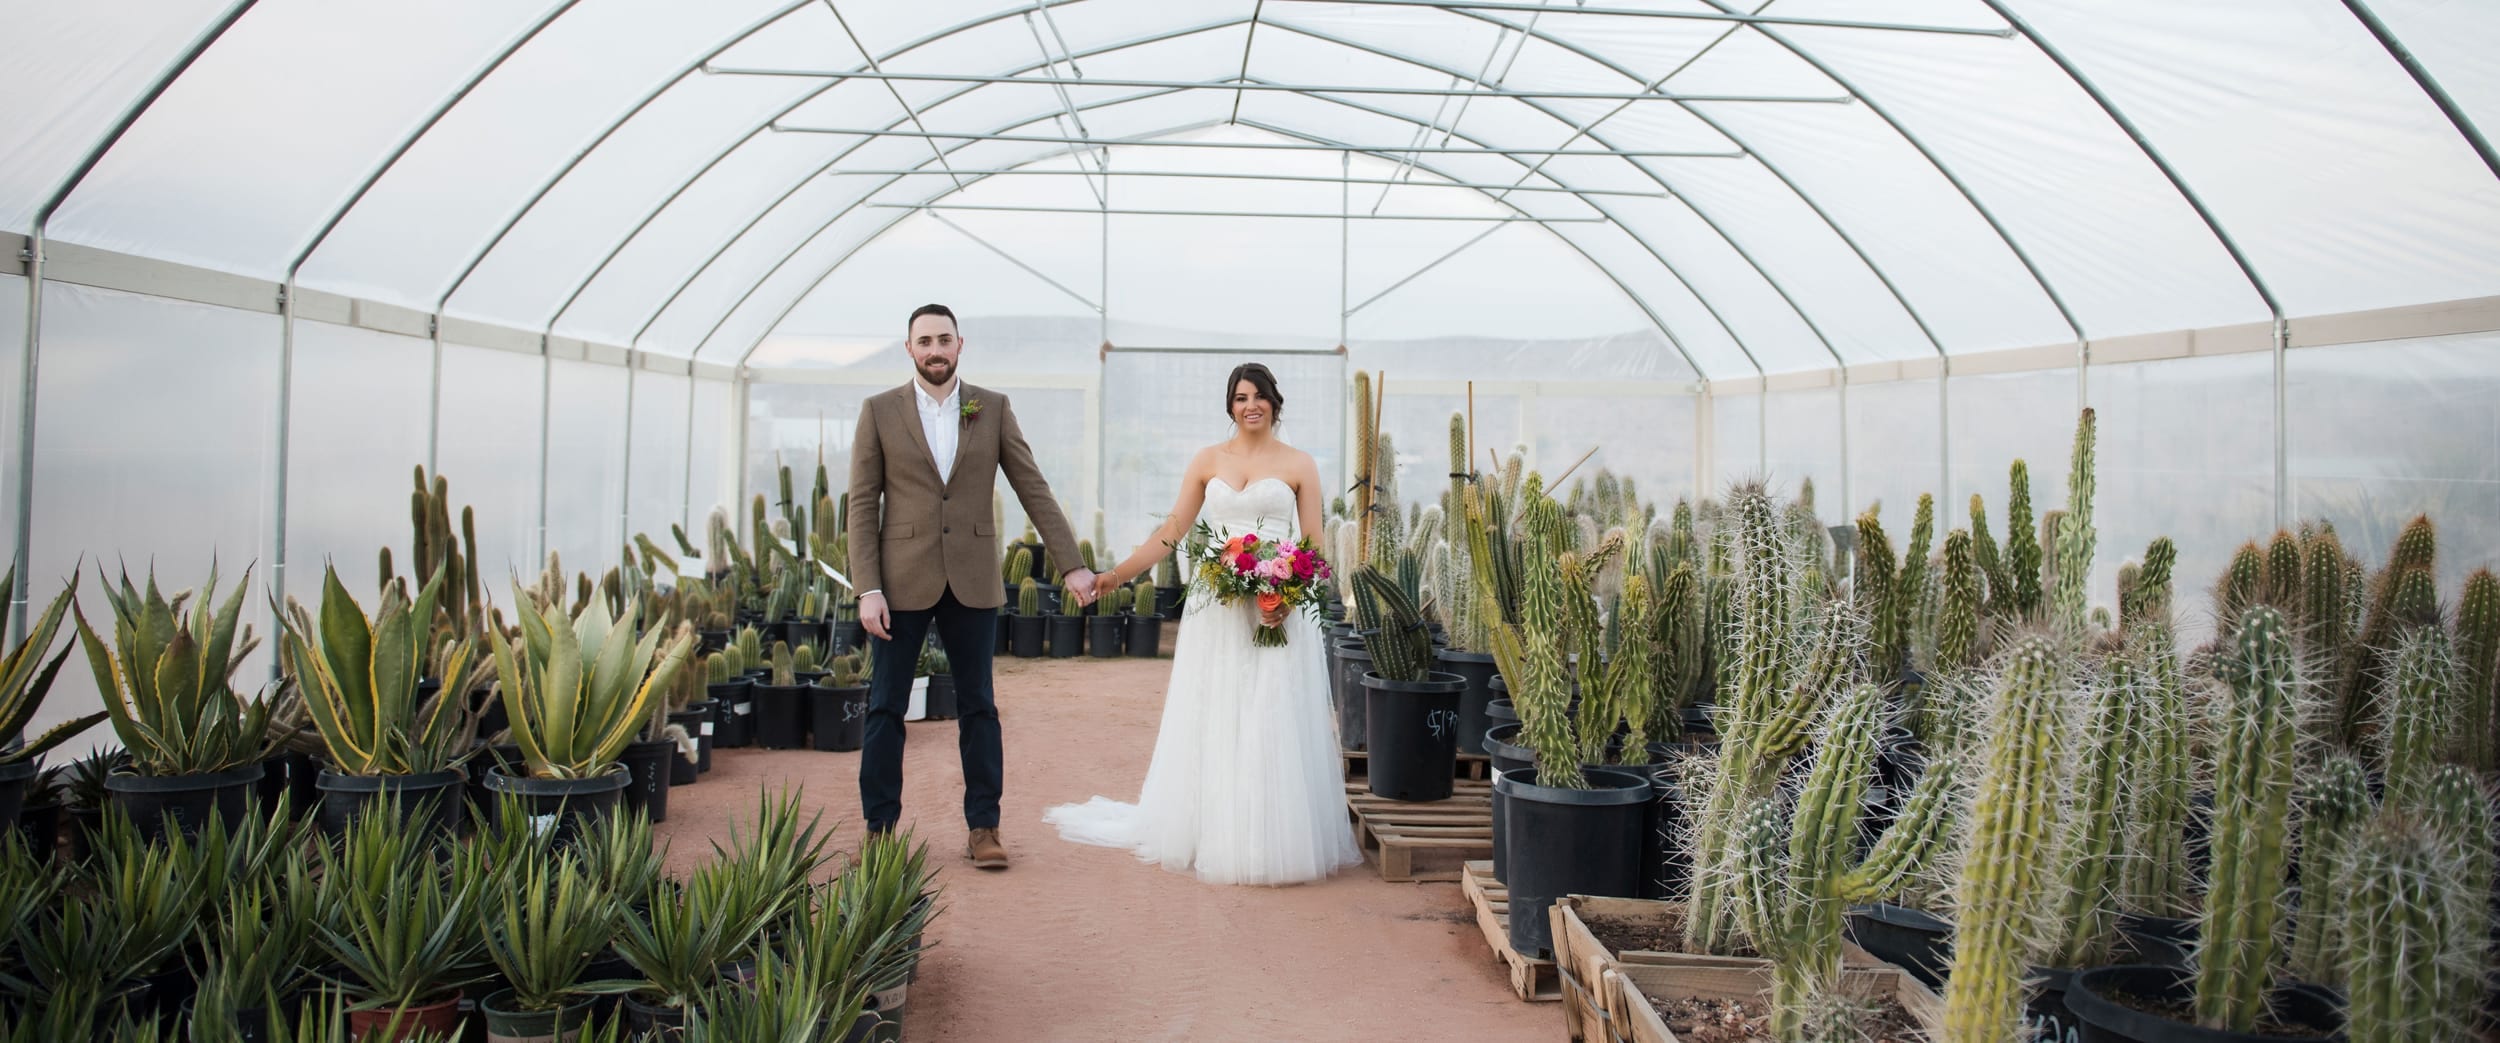 Bride and groom pose in a cactus garden.